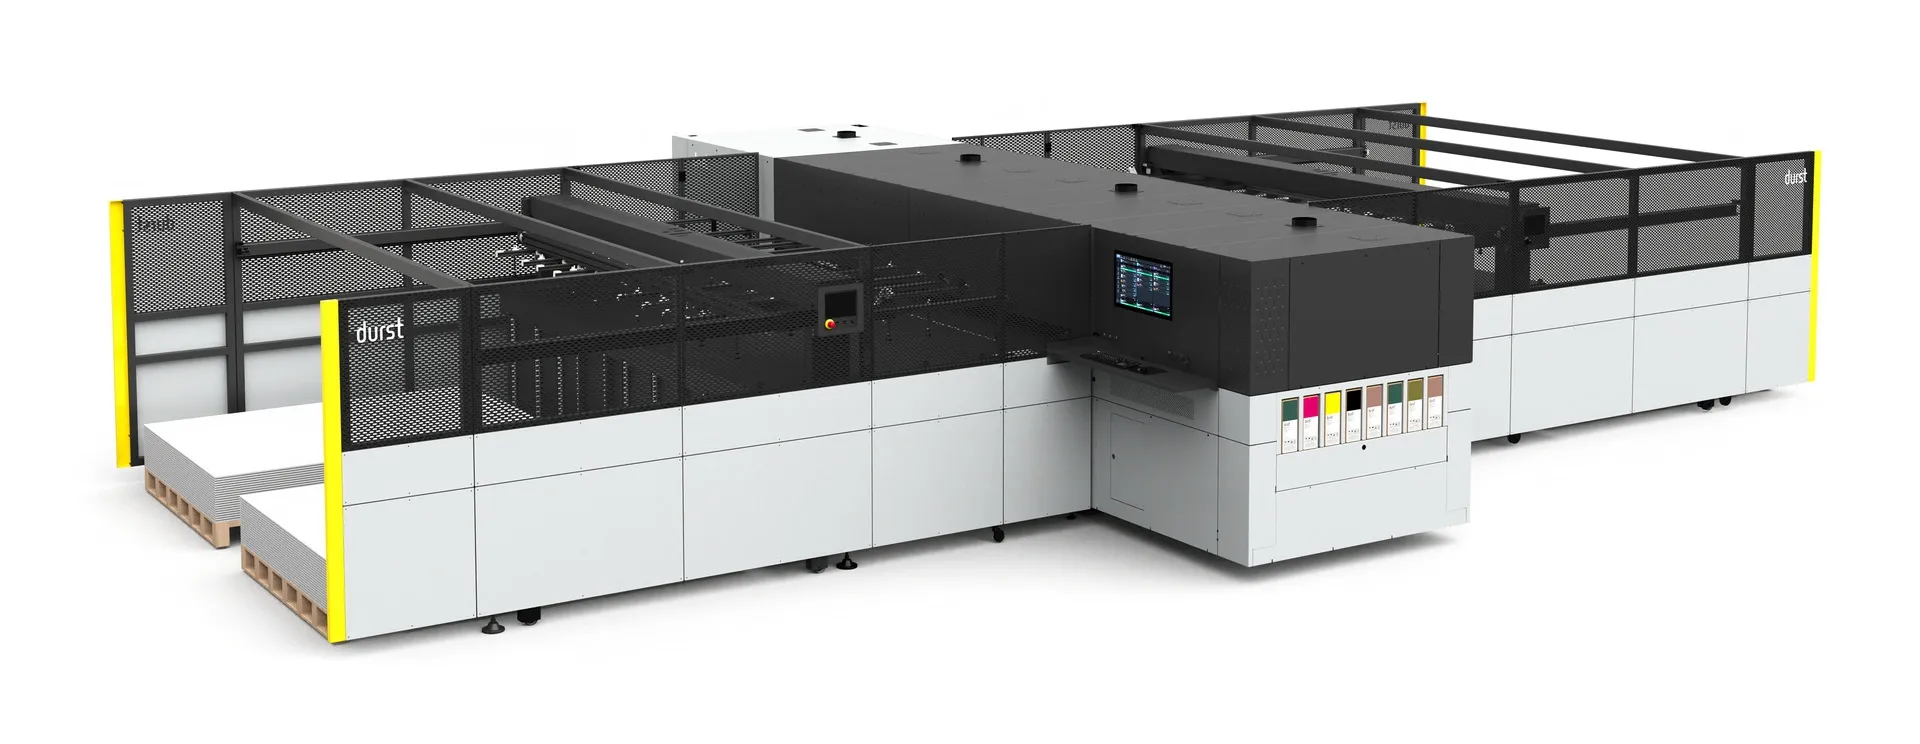 durst-P5-AUTOMAT_自動給排紙システム付印刷機